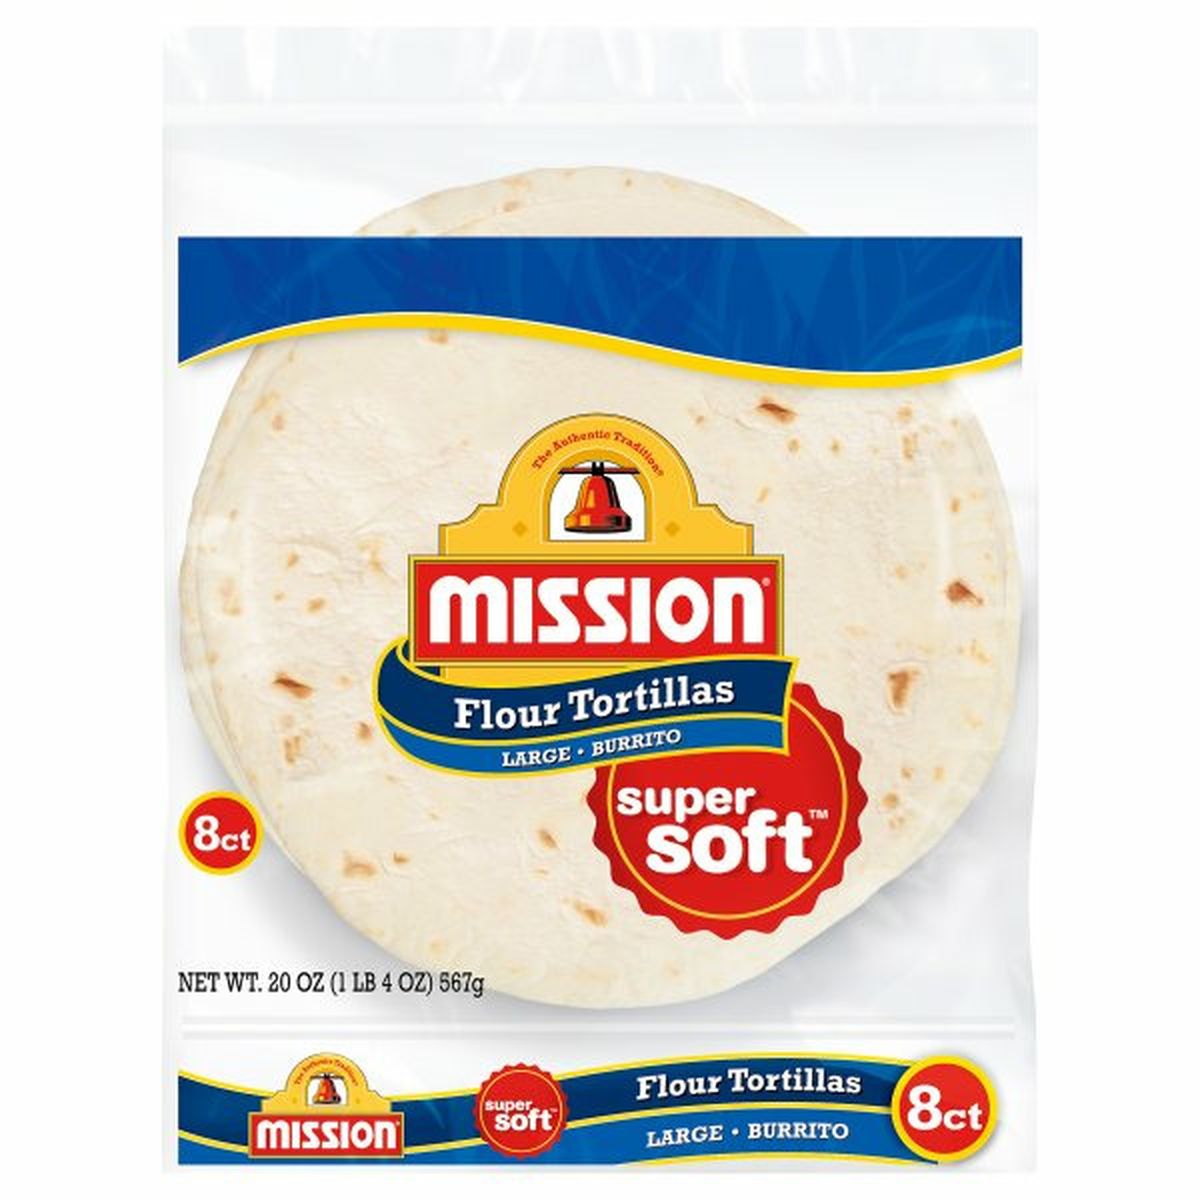 Calories in Mission Super Soft Flour Tortillas, Large, Burrito